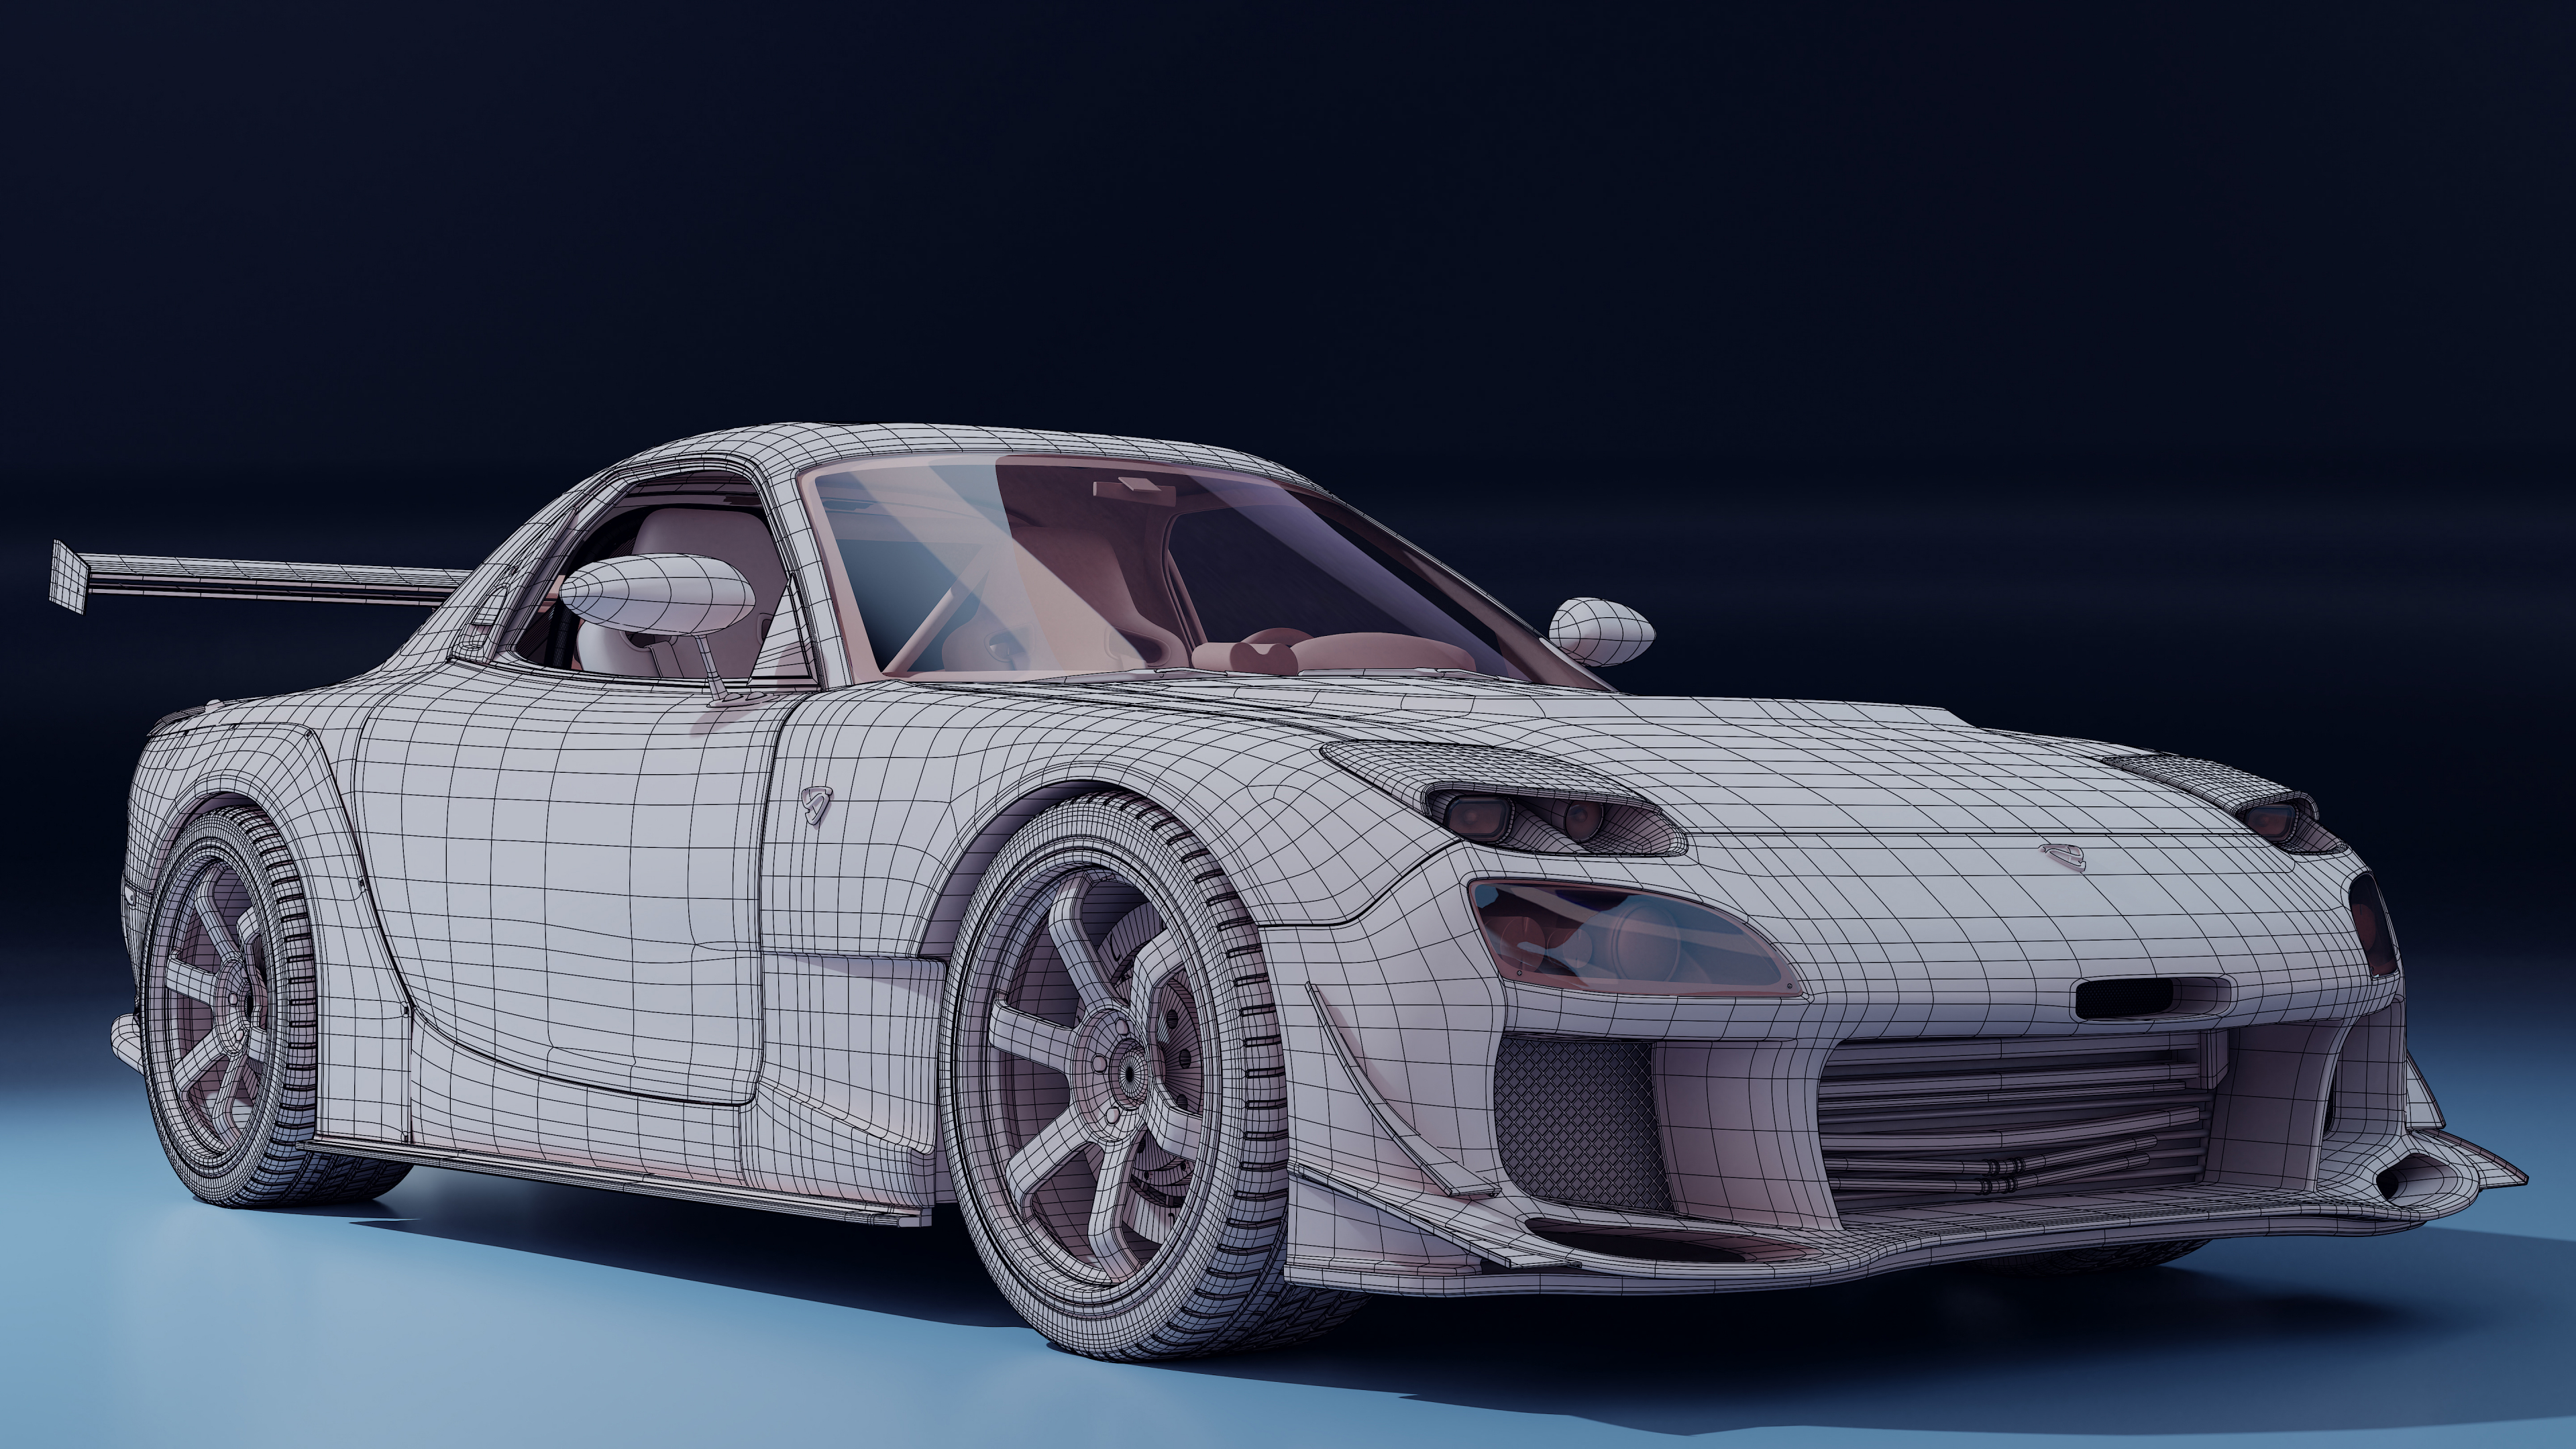 Mazda RX-7 in Blender cycles render image